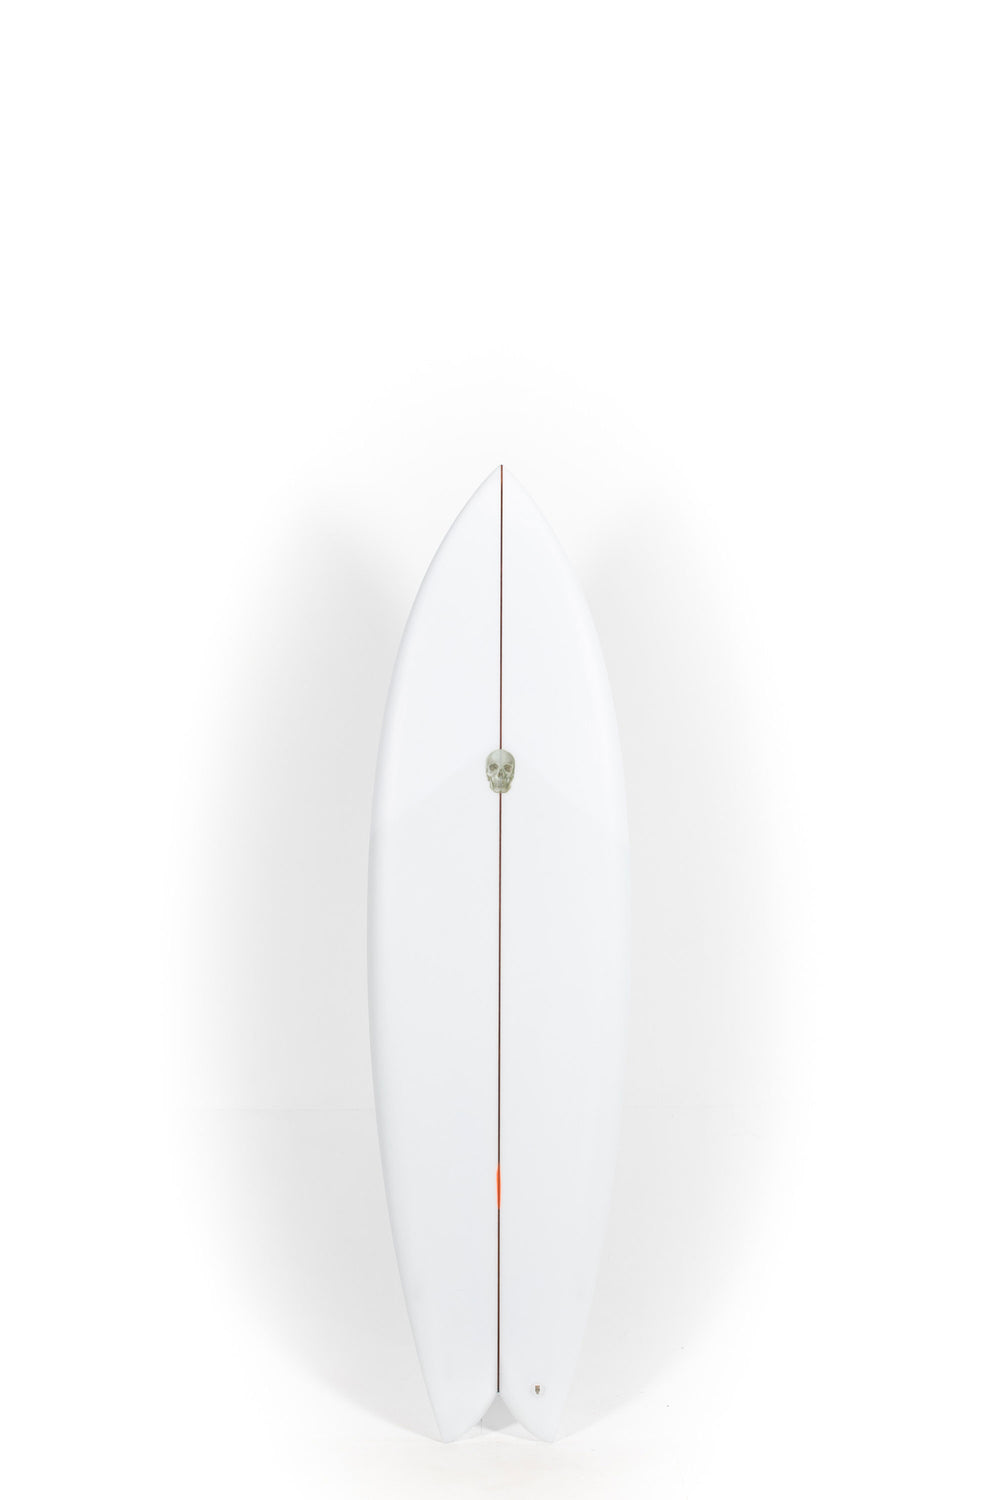 Christenson Surfboards - NAUTILUS - 6'2